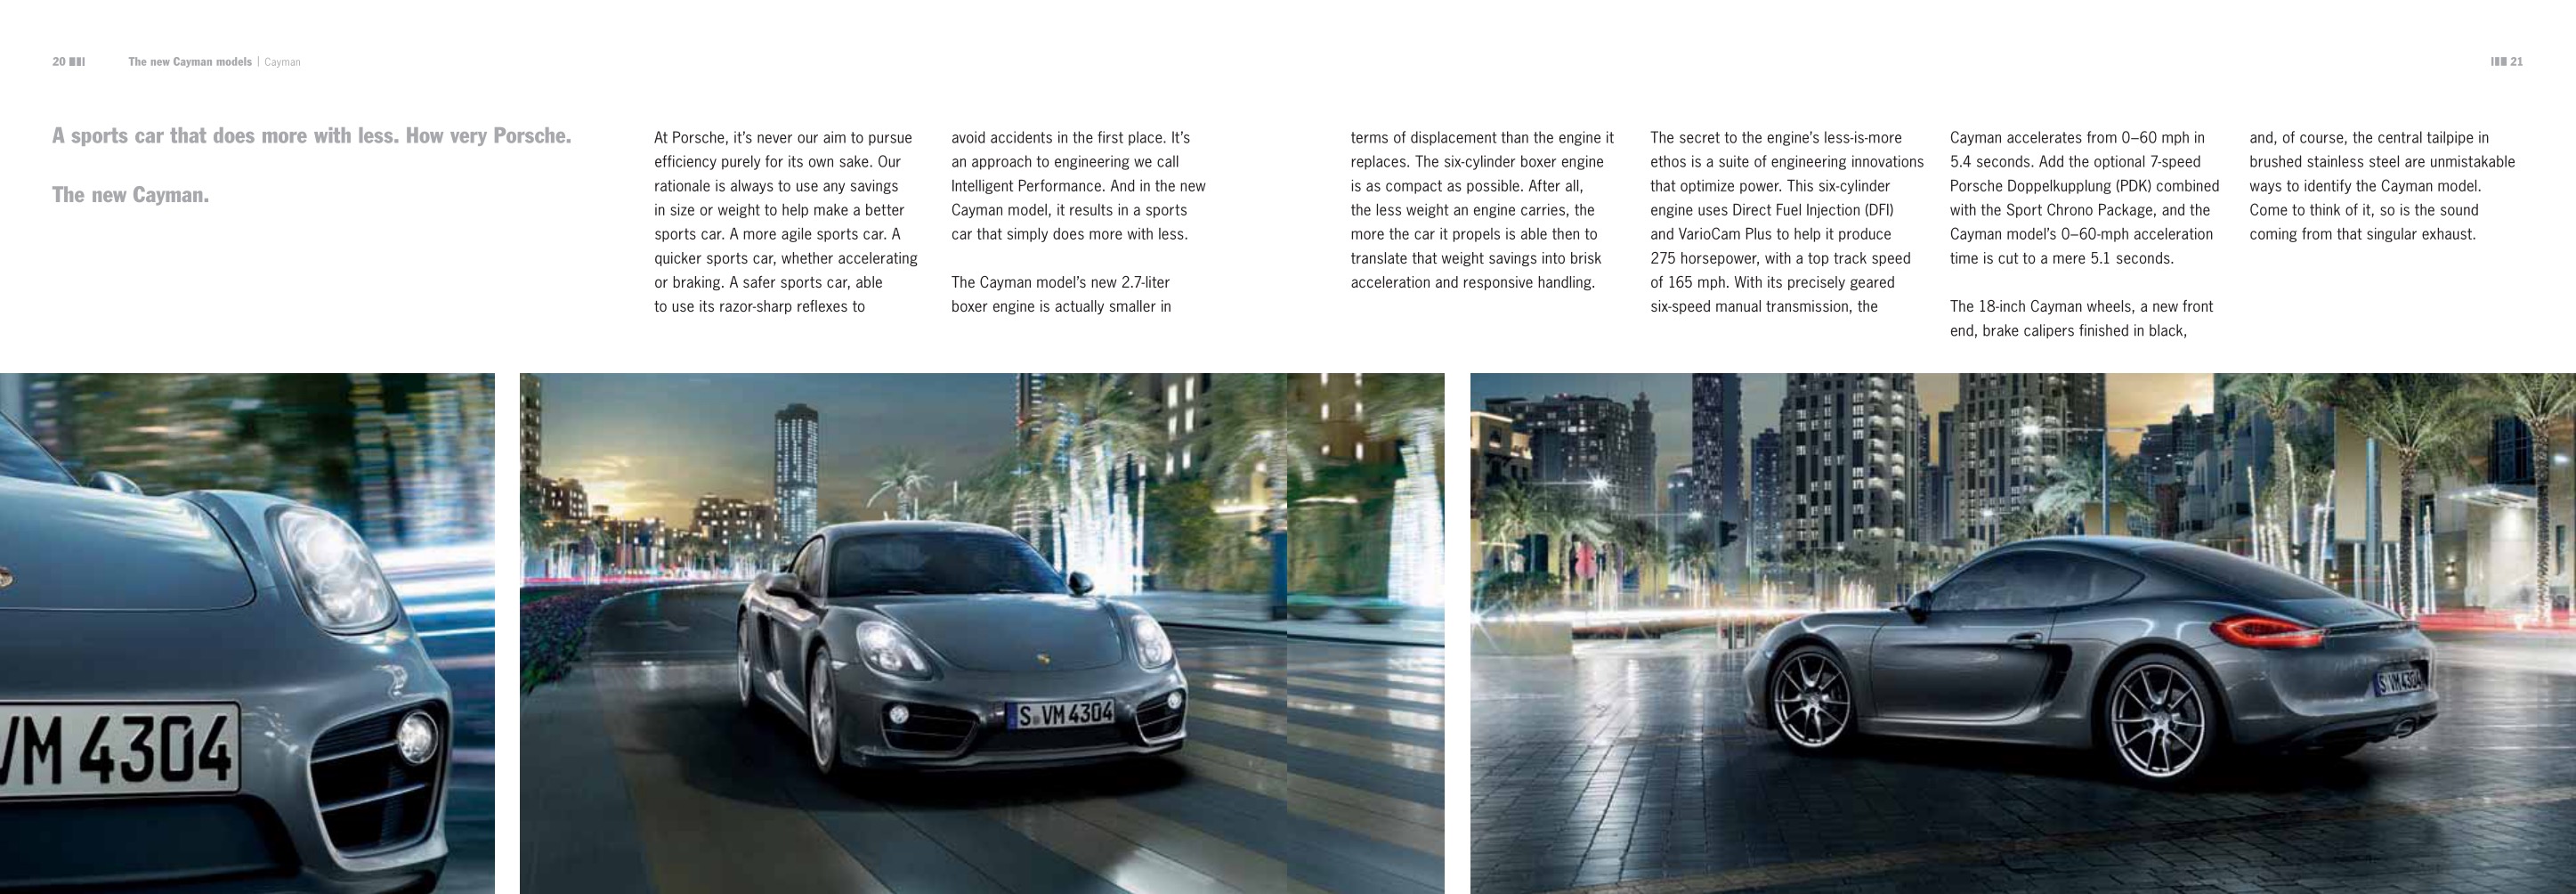 2014 Porsche Cayman Brochure Page 8